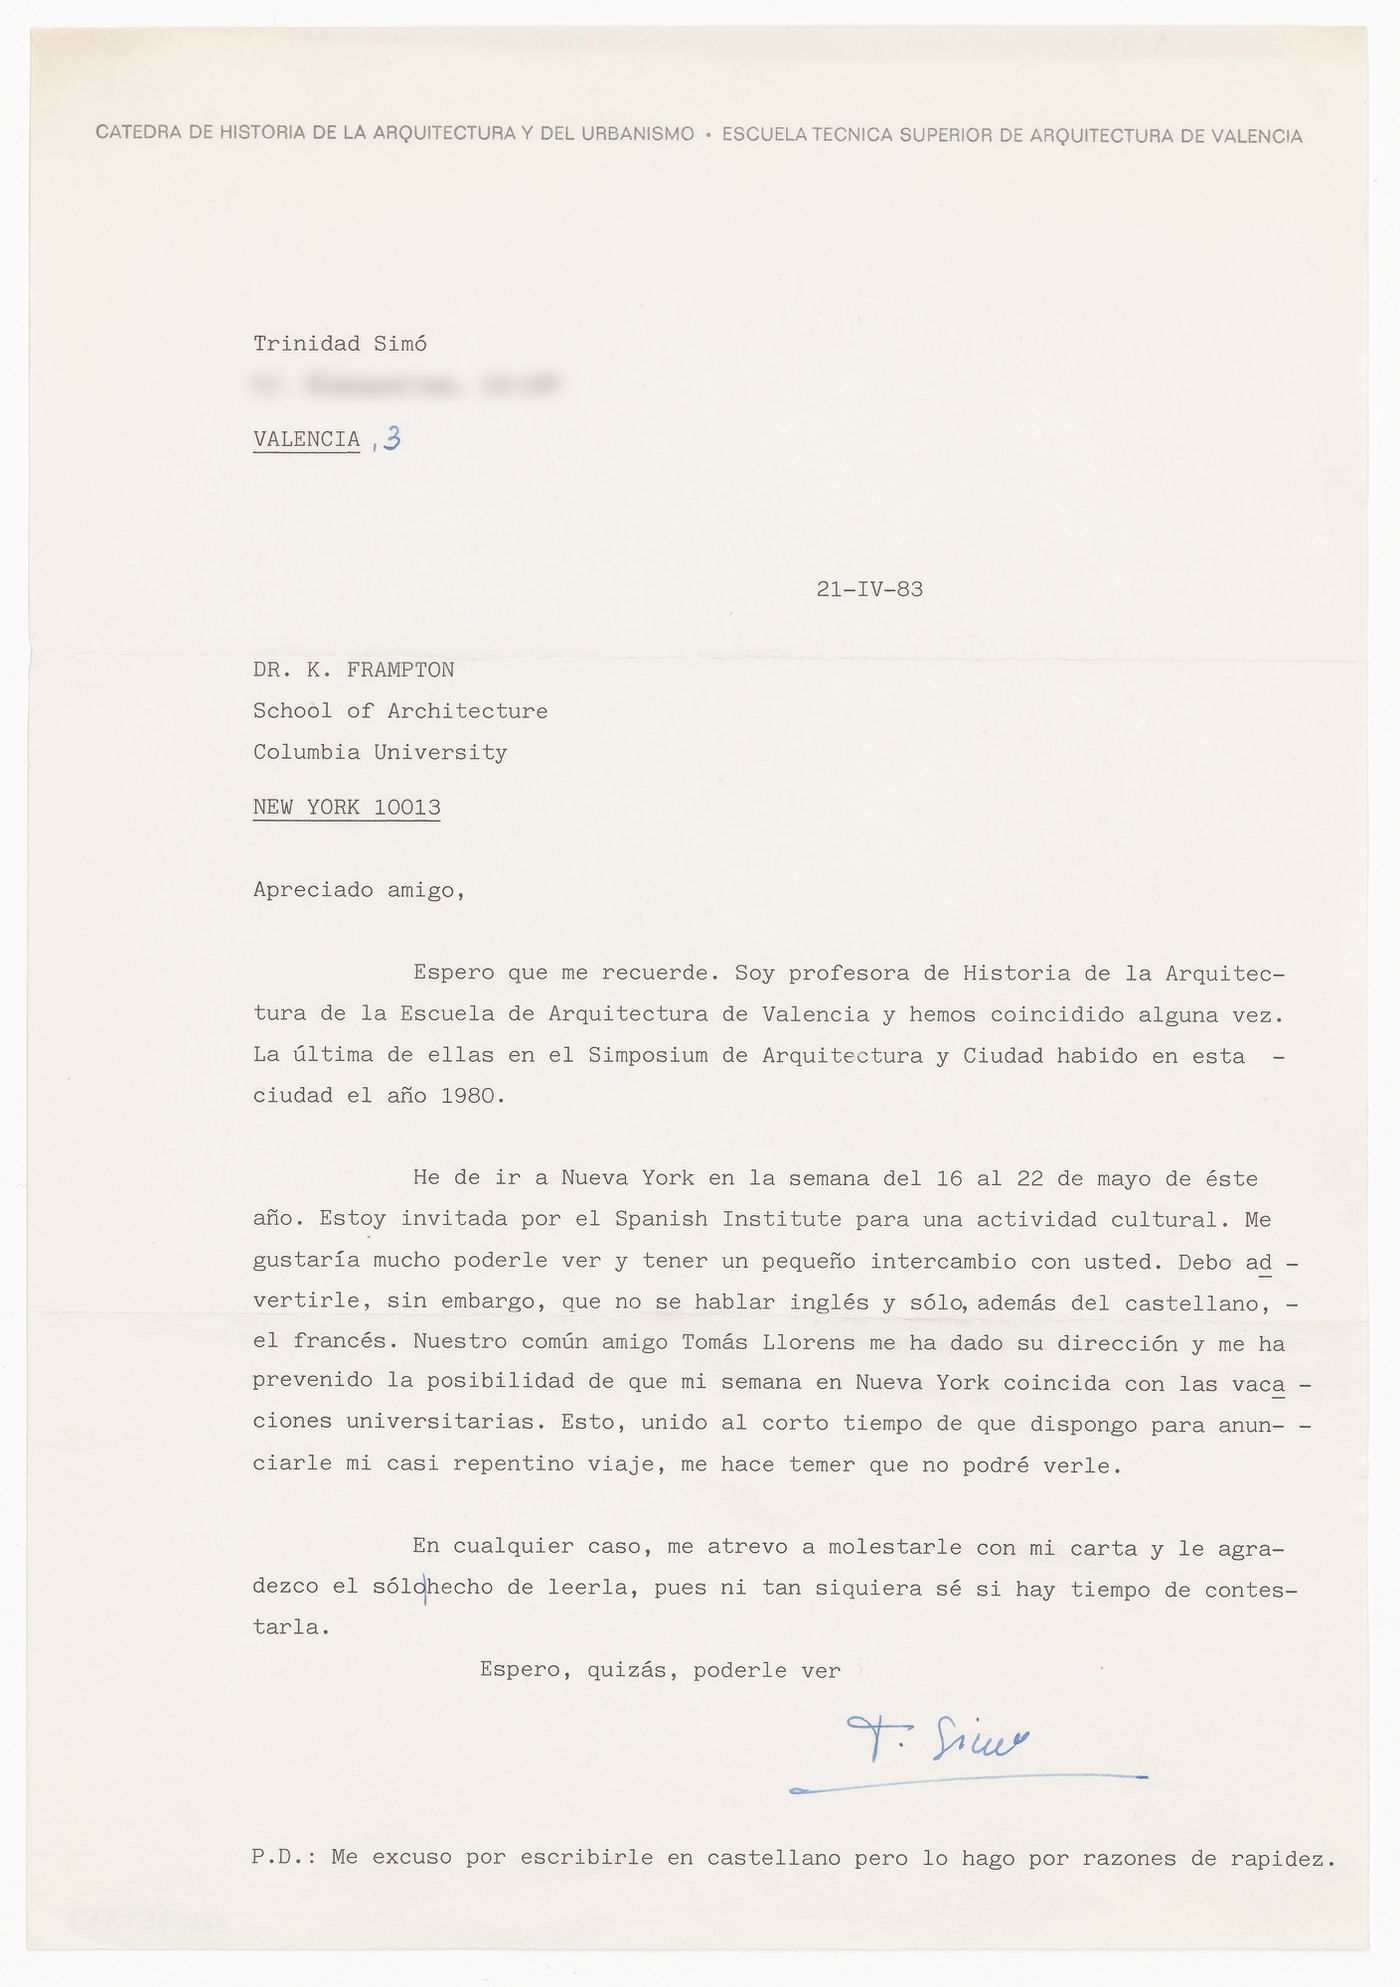 Letter from Trinidad Simó to Kenneth Frampton